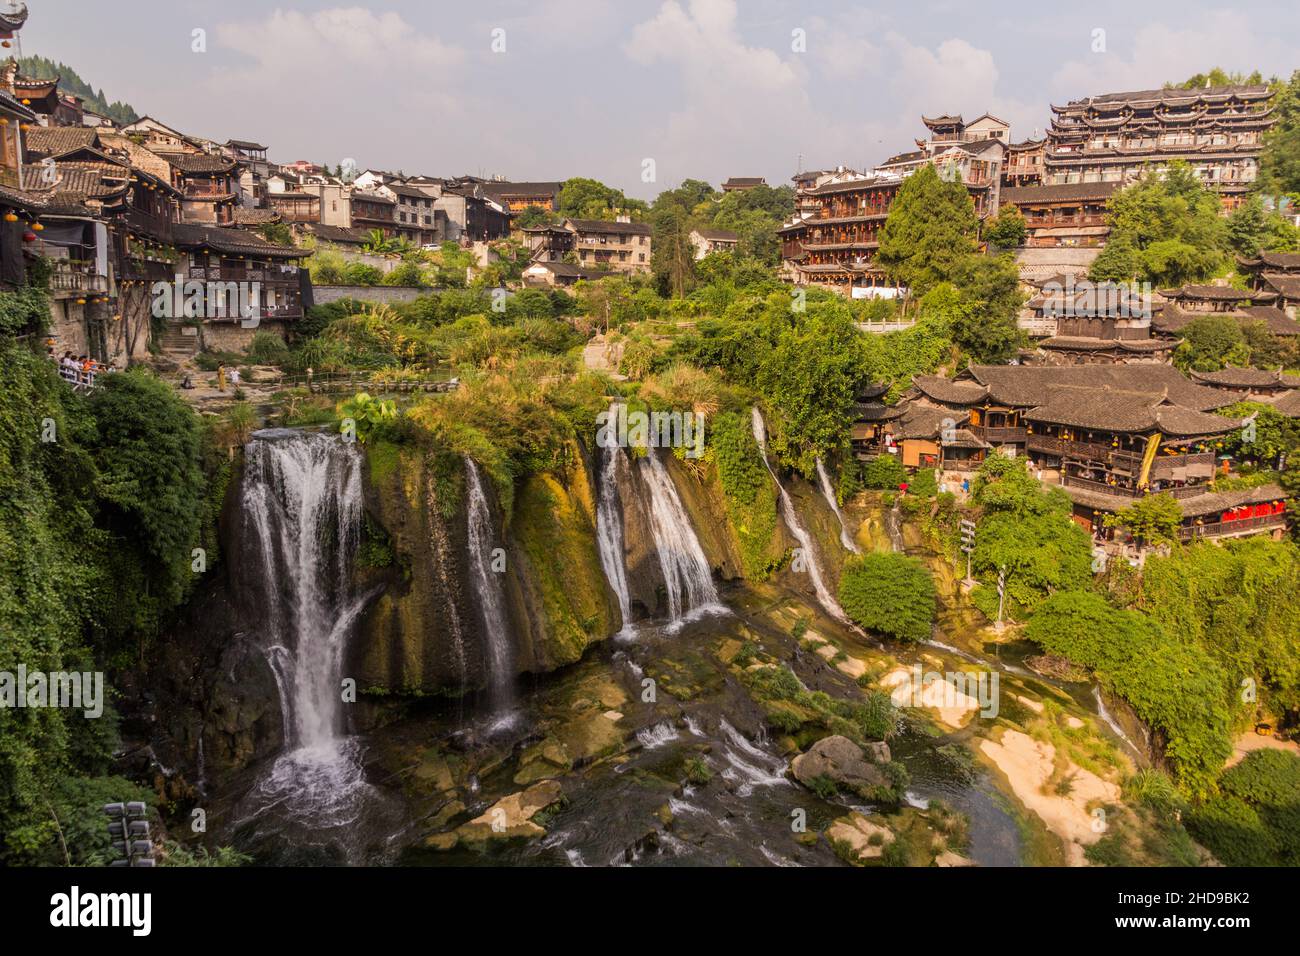 View of Furong Zhen town and waterfall, Hunan province, China Stock Photo